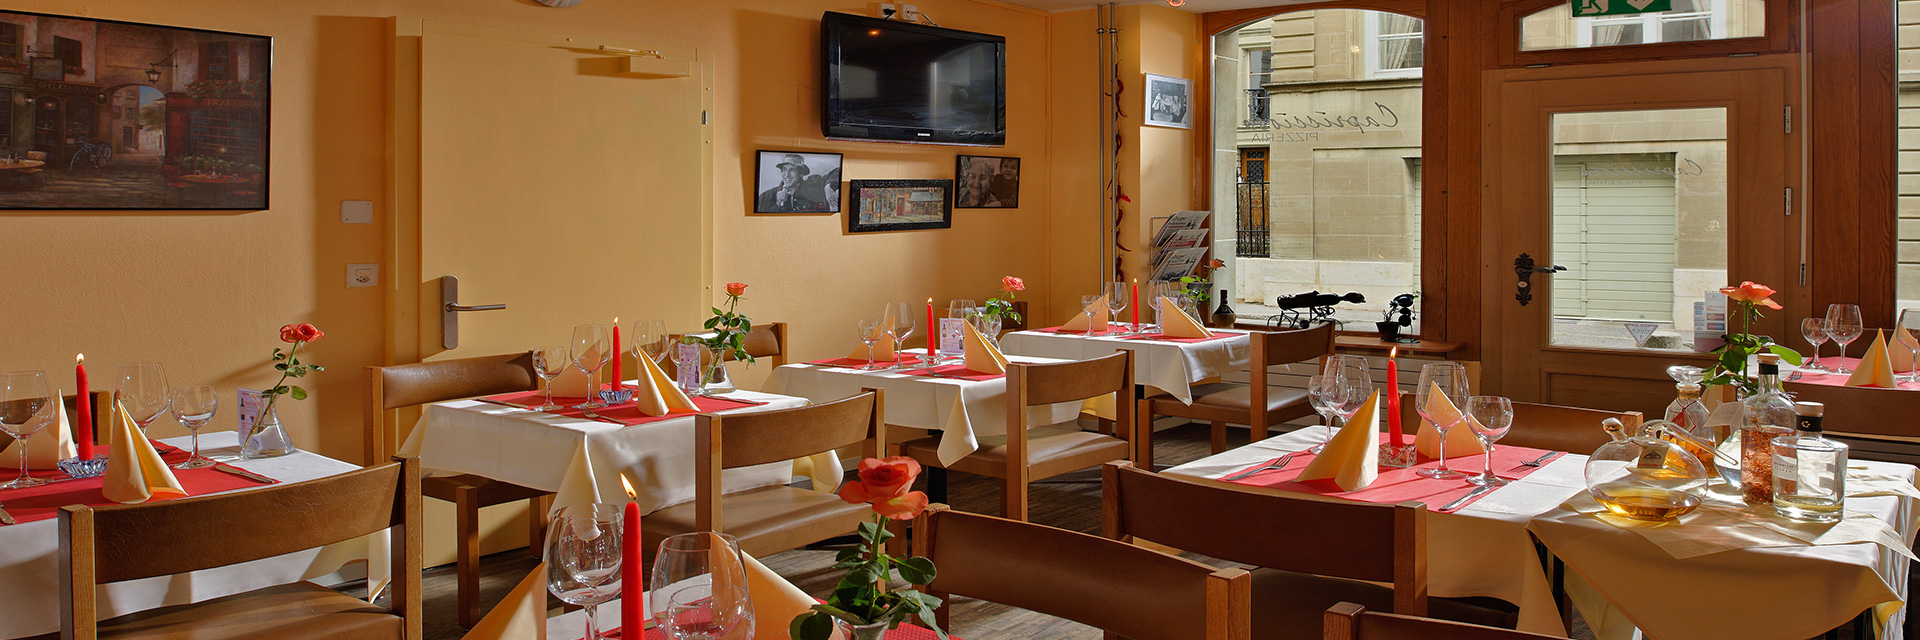 fribourgcity_restaurant_1920x640